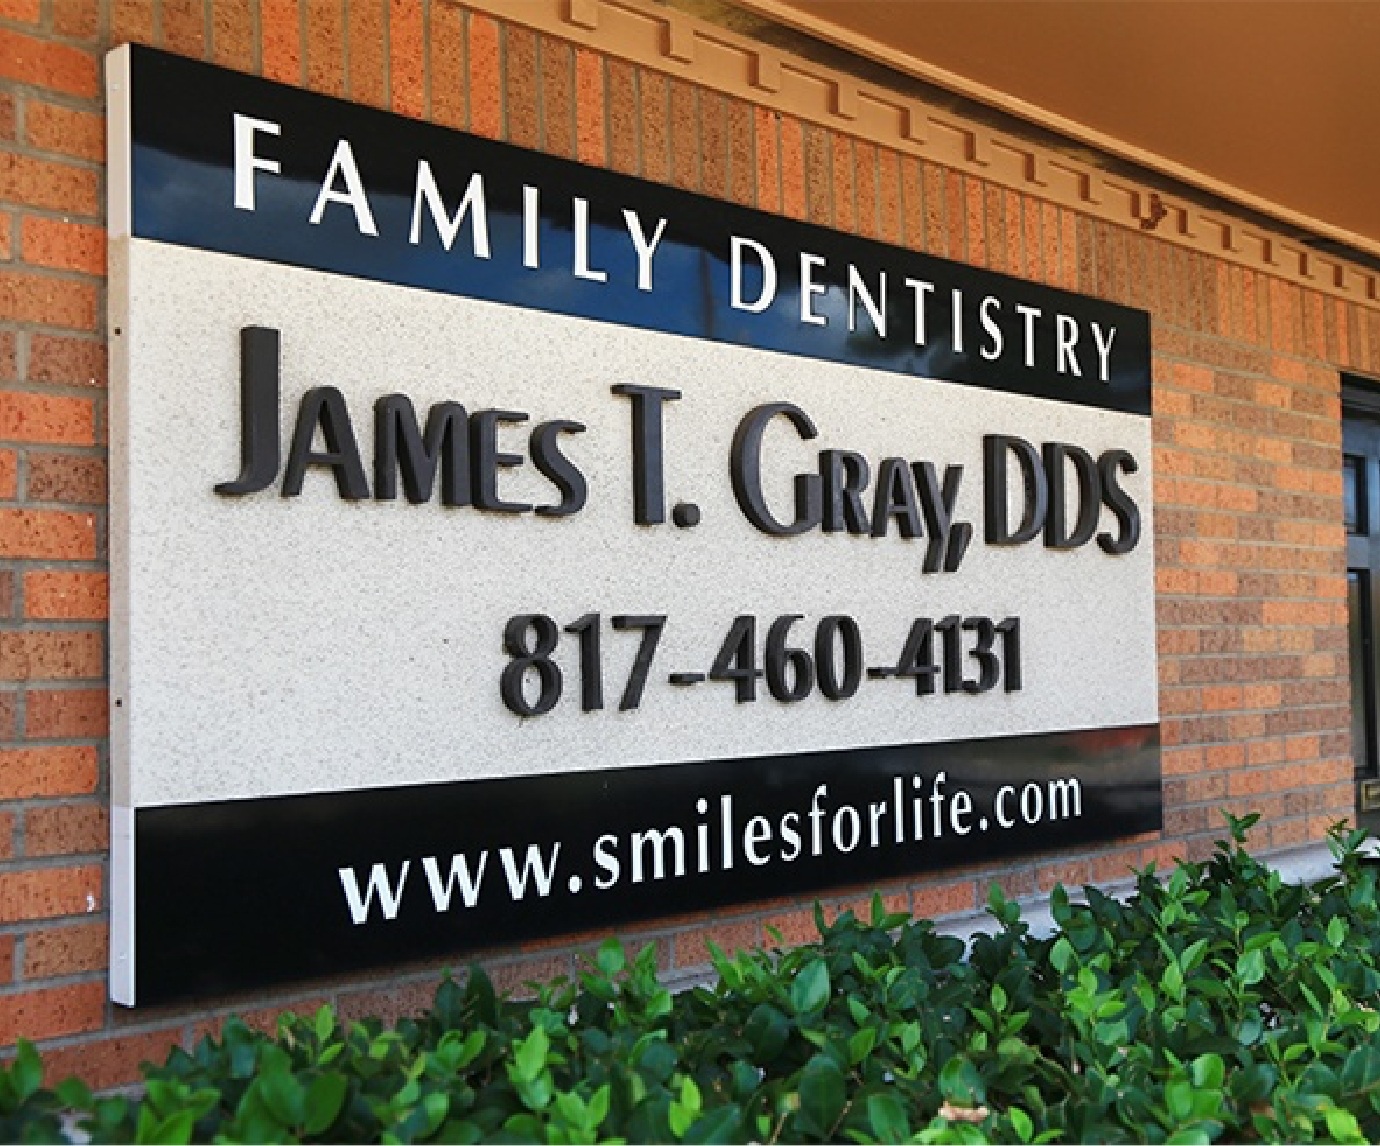 Sign for James T Gray DDS dental office in Arlington